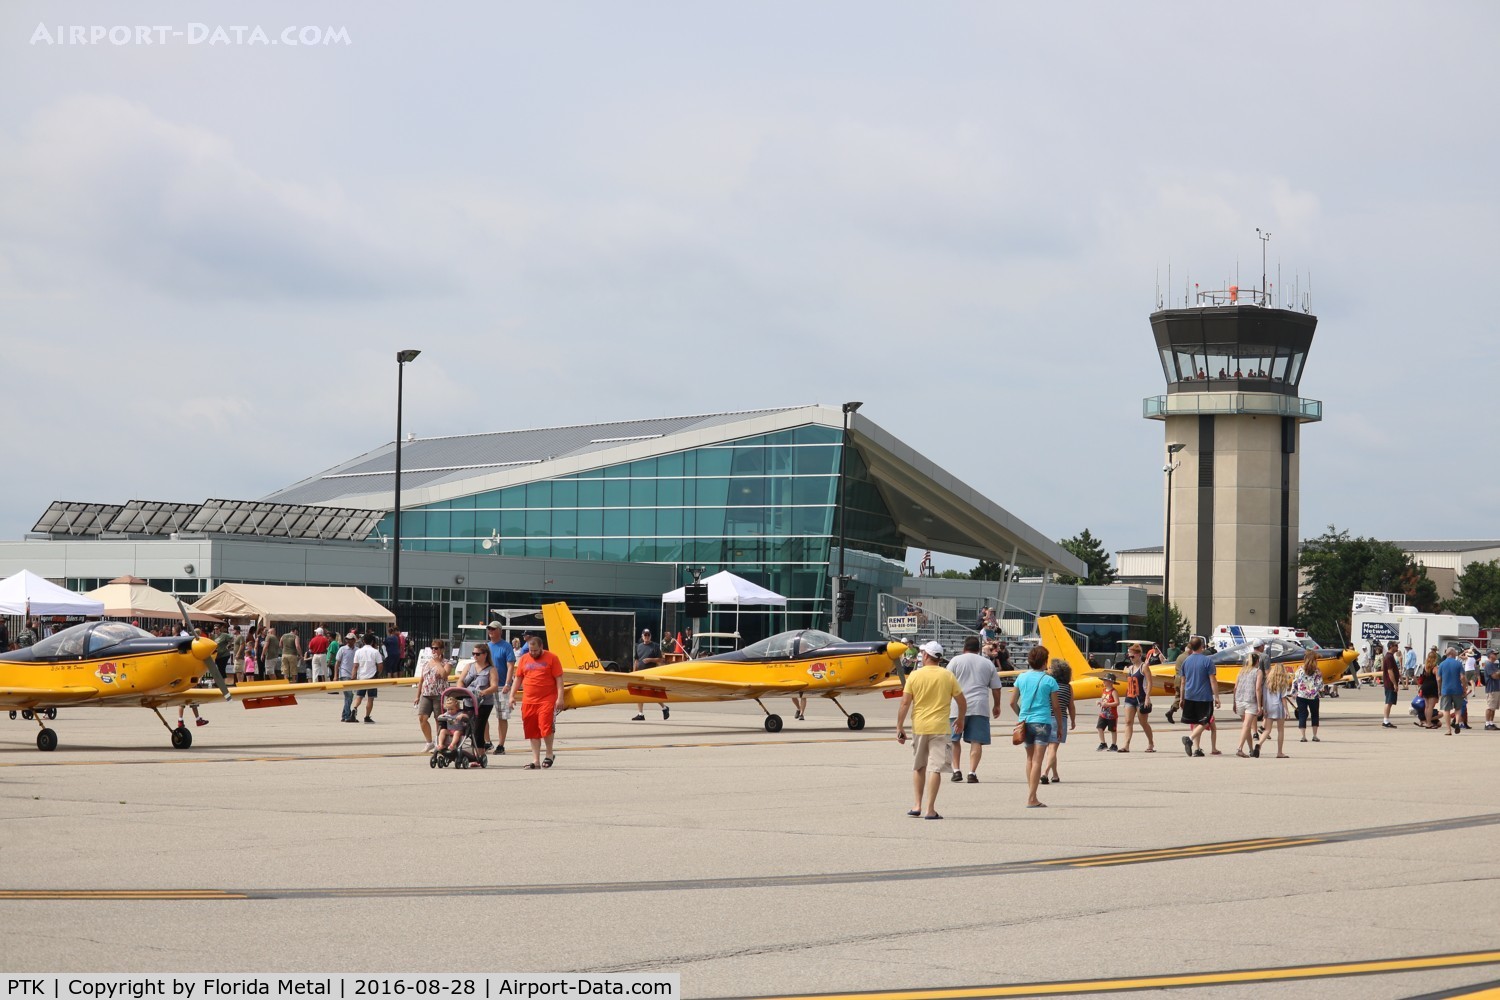 Oakland County International Airport (PTK) - New terminal